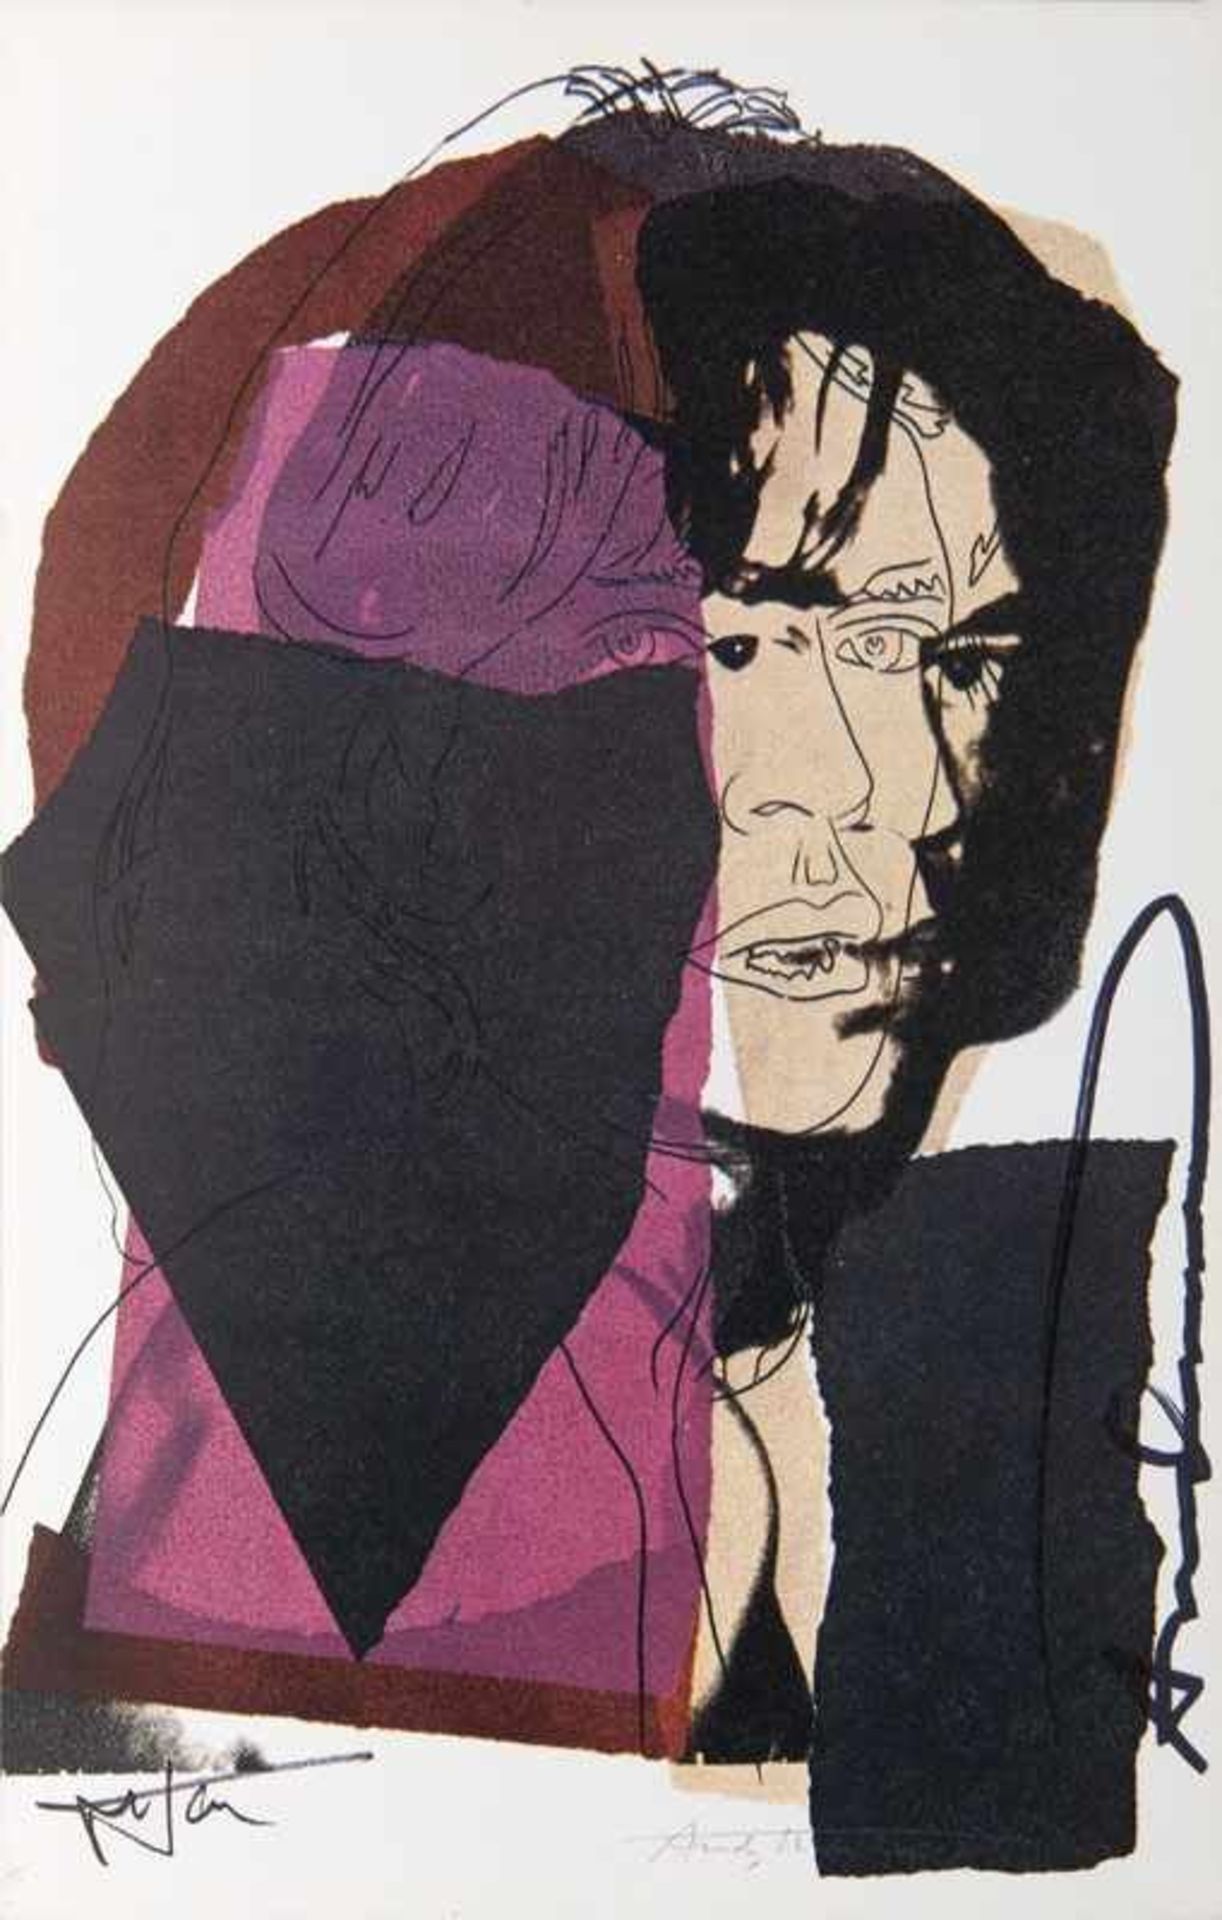 Andy Warhol (Pittsburgh 1928 - New York 1987) Mick Jagger Um 1975, Farboffset, 15,5 x 10 cm, r. u.